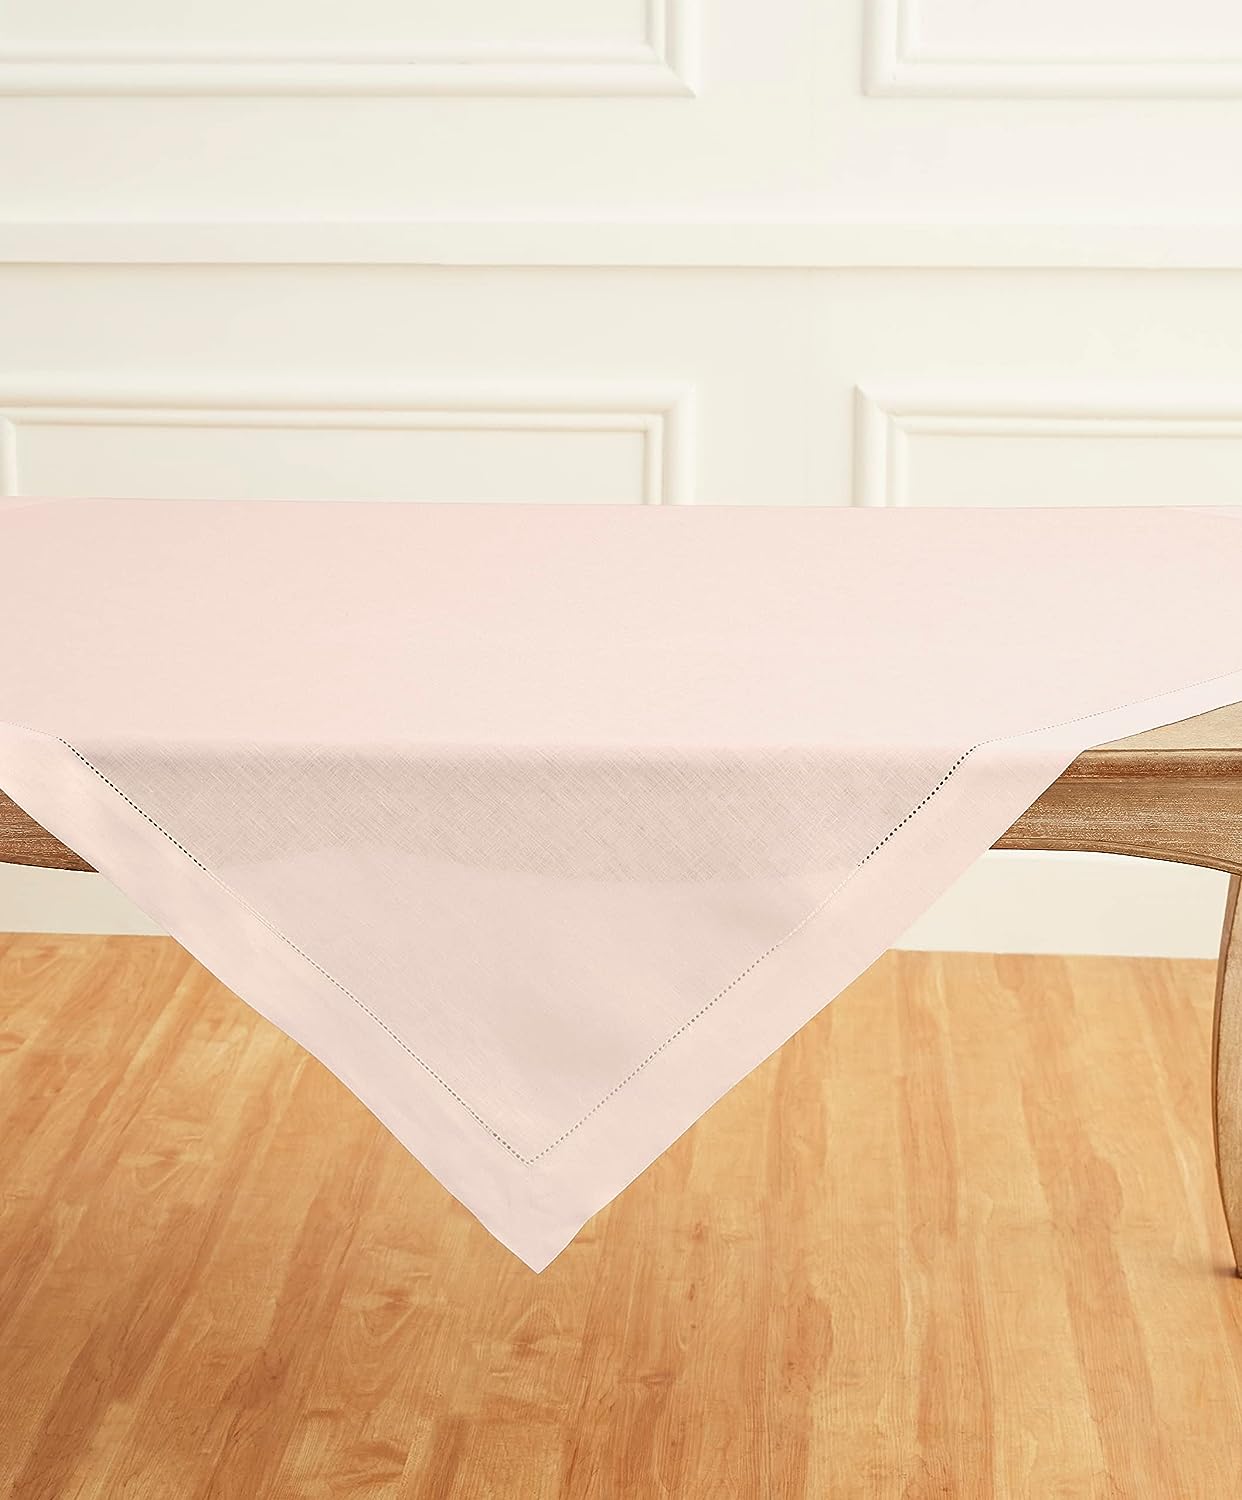 Hemstitched Table Linens (Light Pink Color)